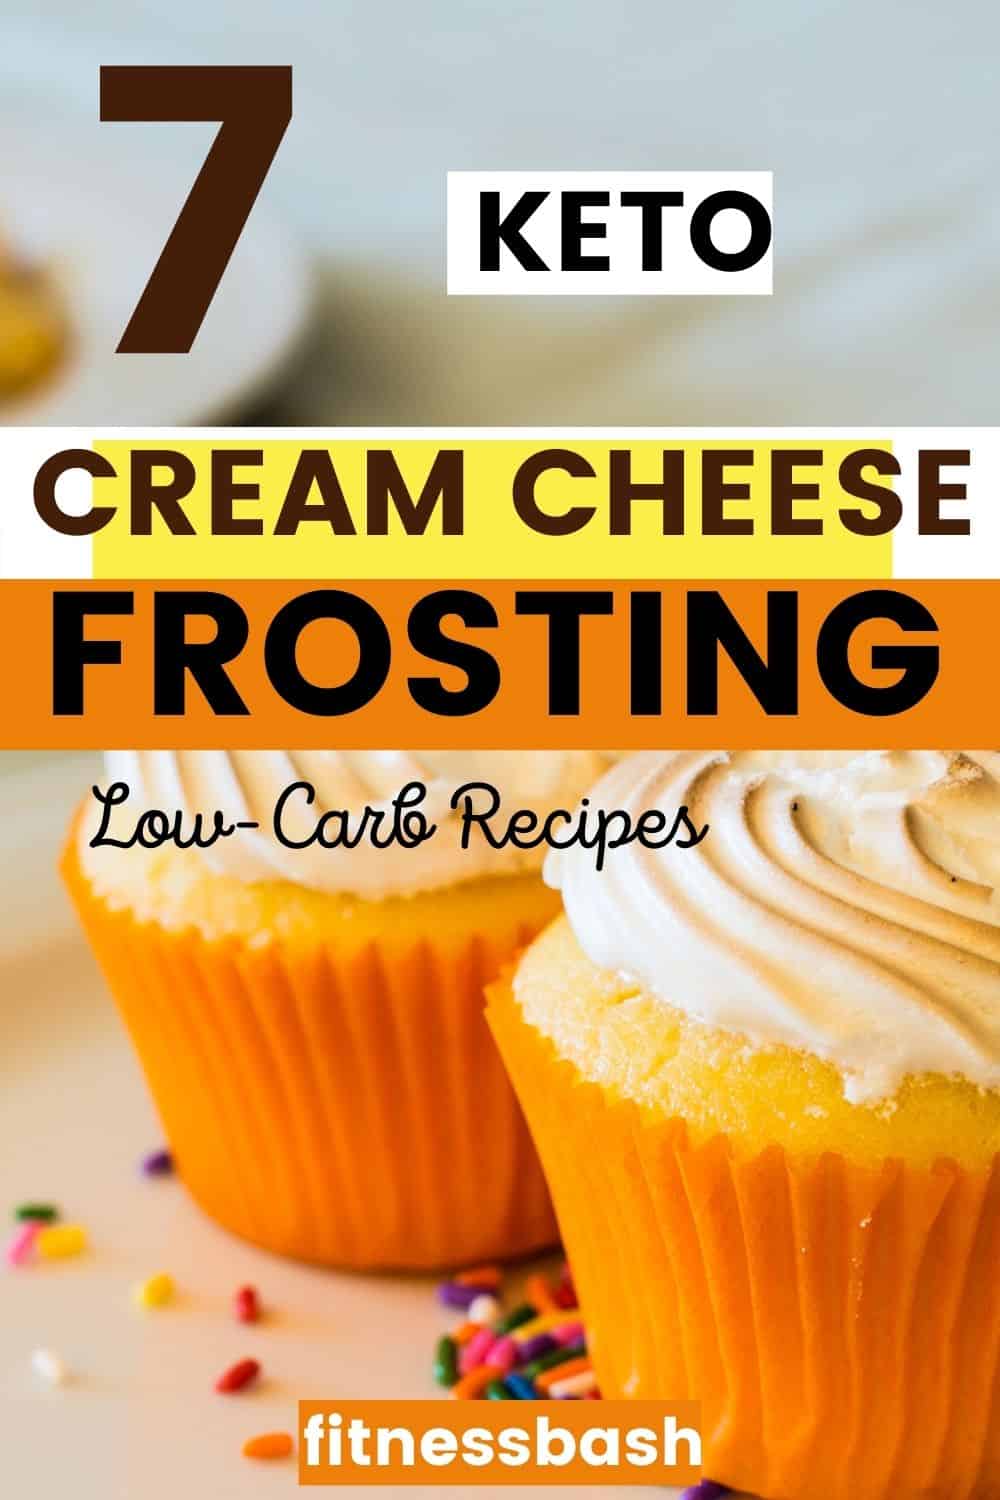 keto cream cheese frosting (9)